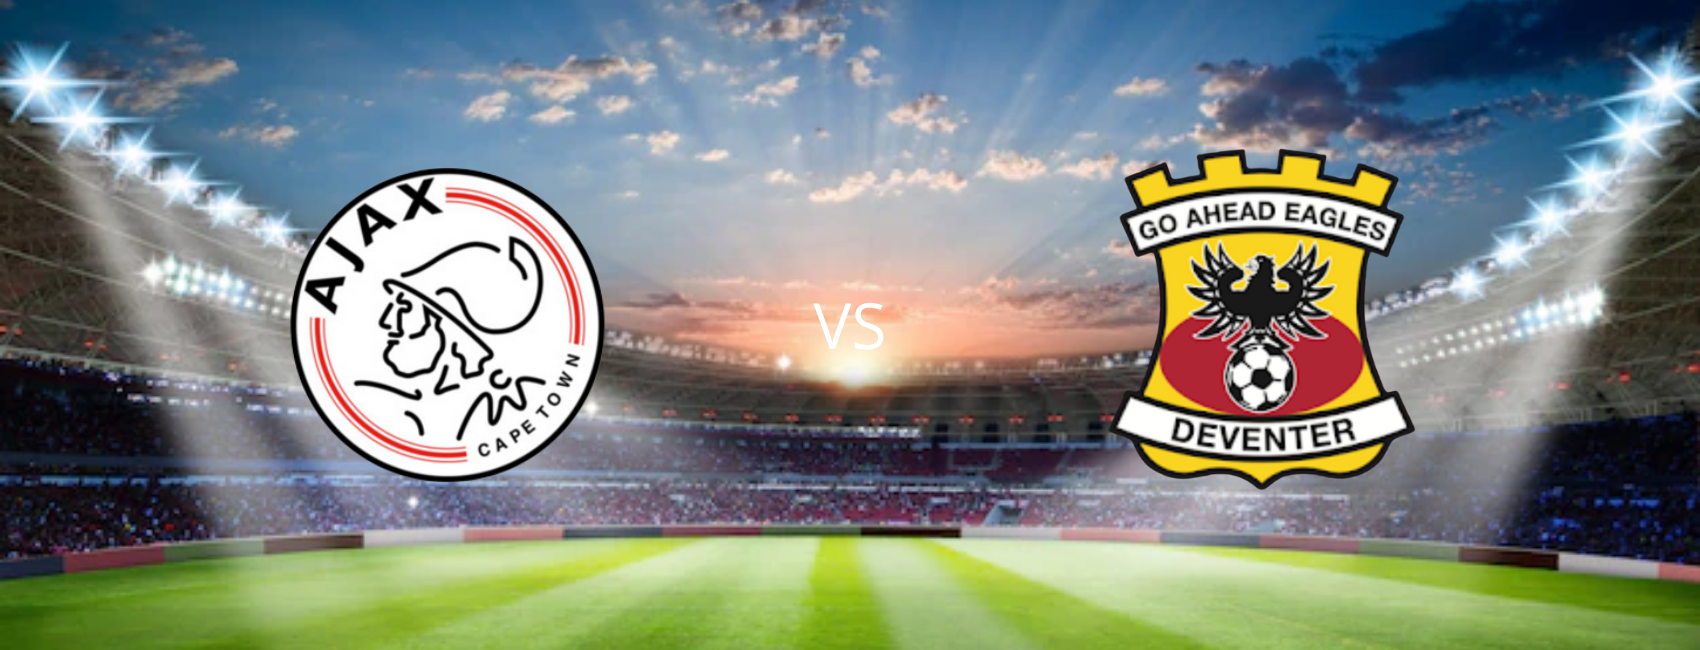 AFC Ajax vs Go Ahead Eagles Dutch Eredivisie Tickets on sale now | Ticombo